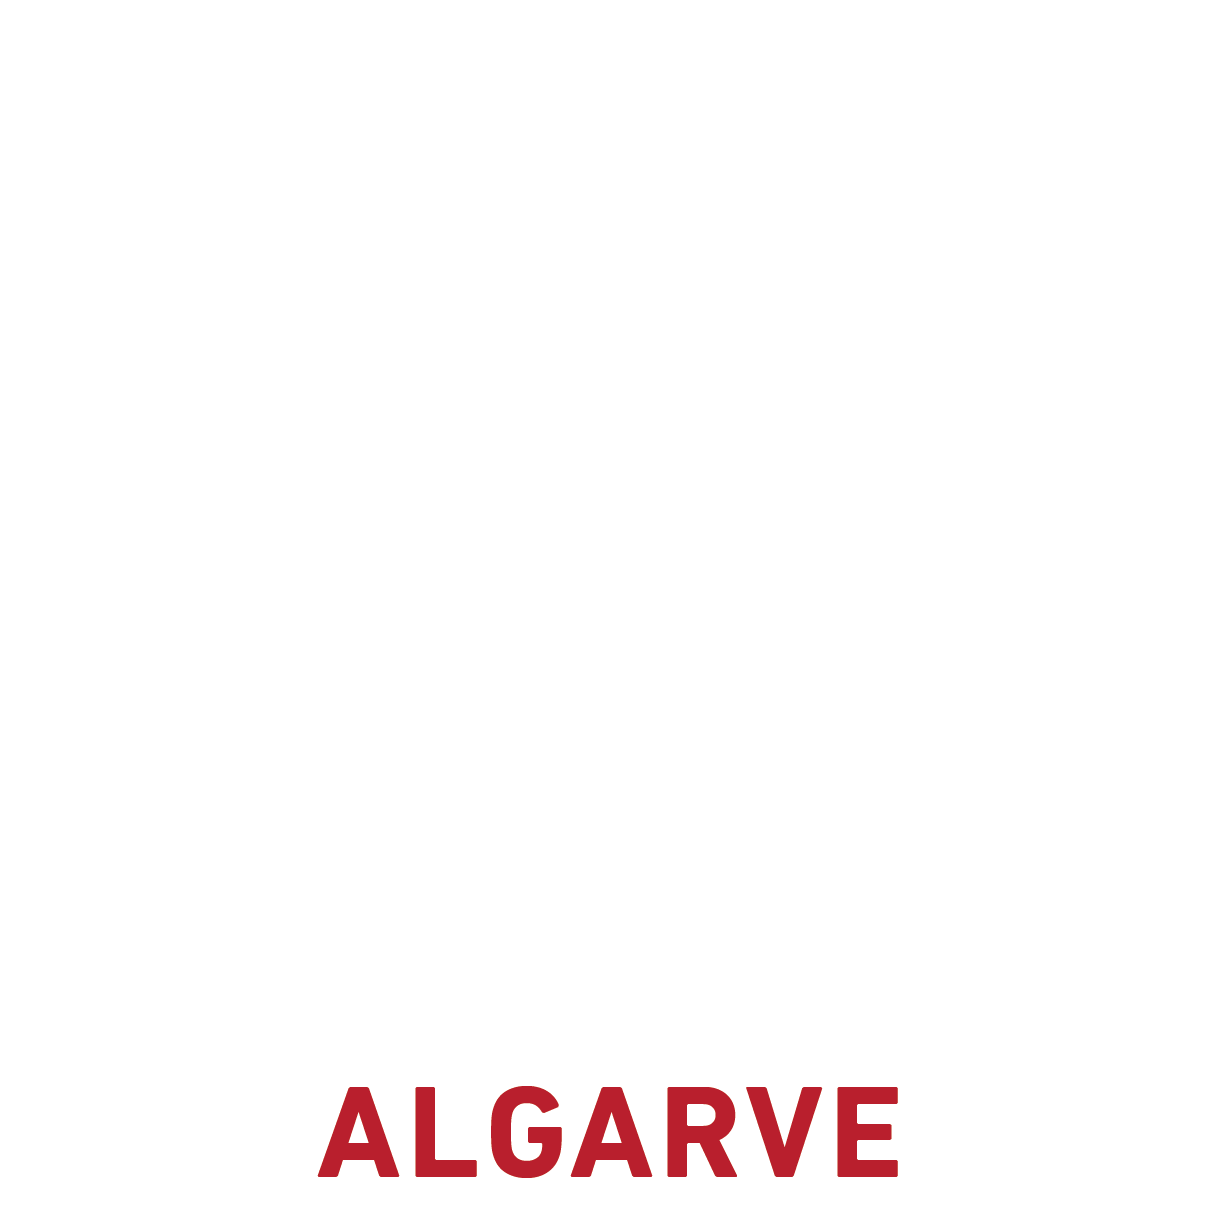 Aceleradora de Comércio Digital Algarve